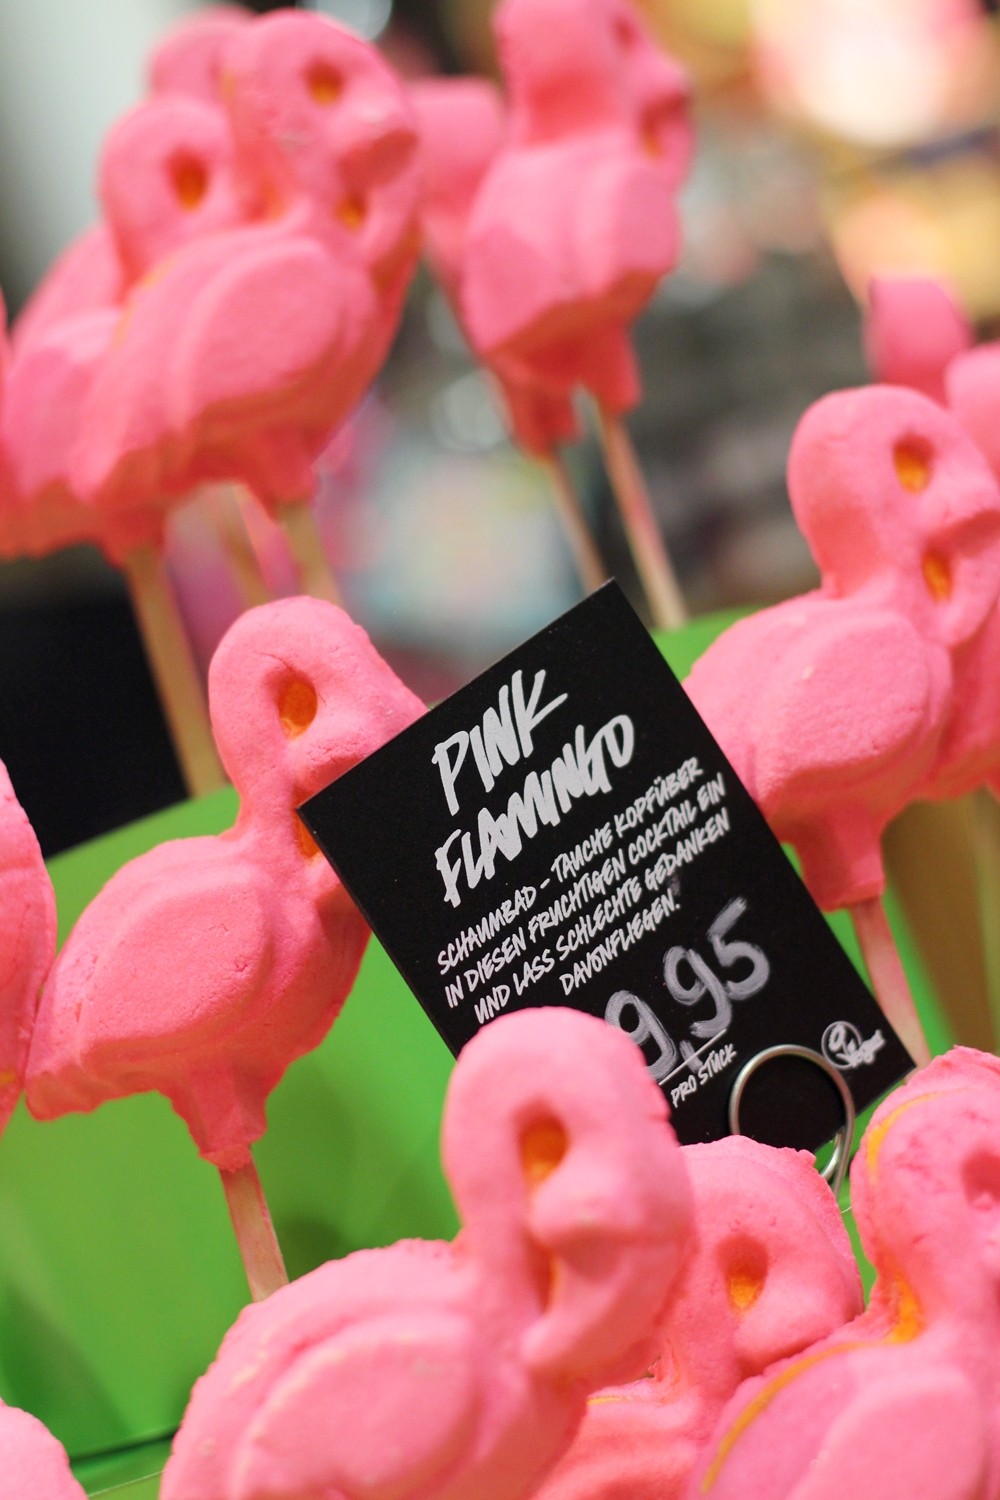 Pink Flamingo Schaumbad Lush Cosmetics 4